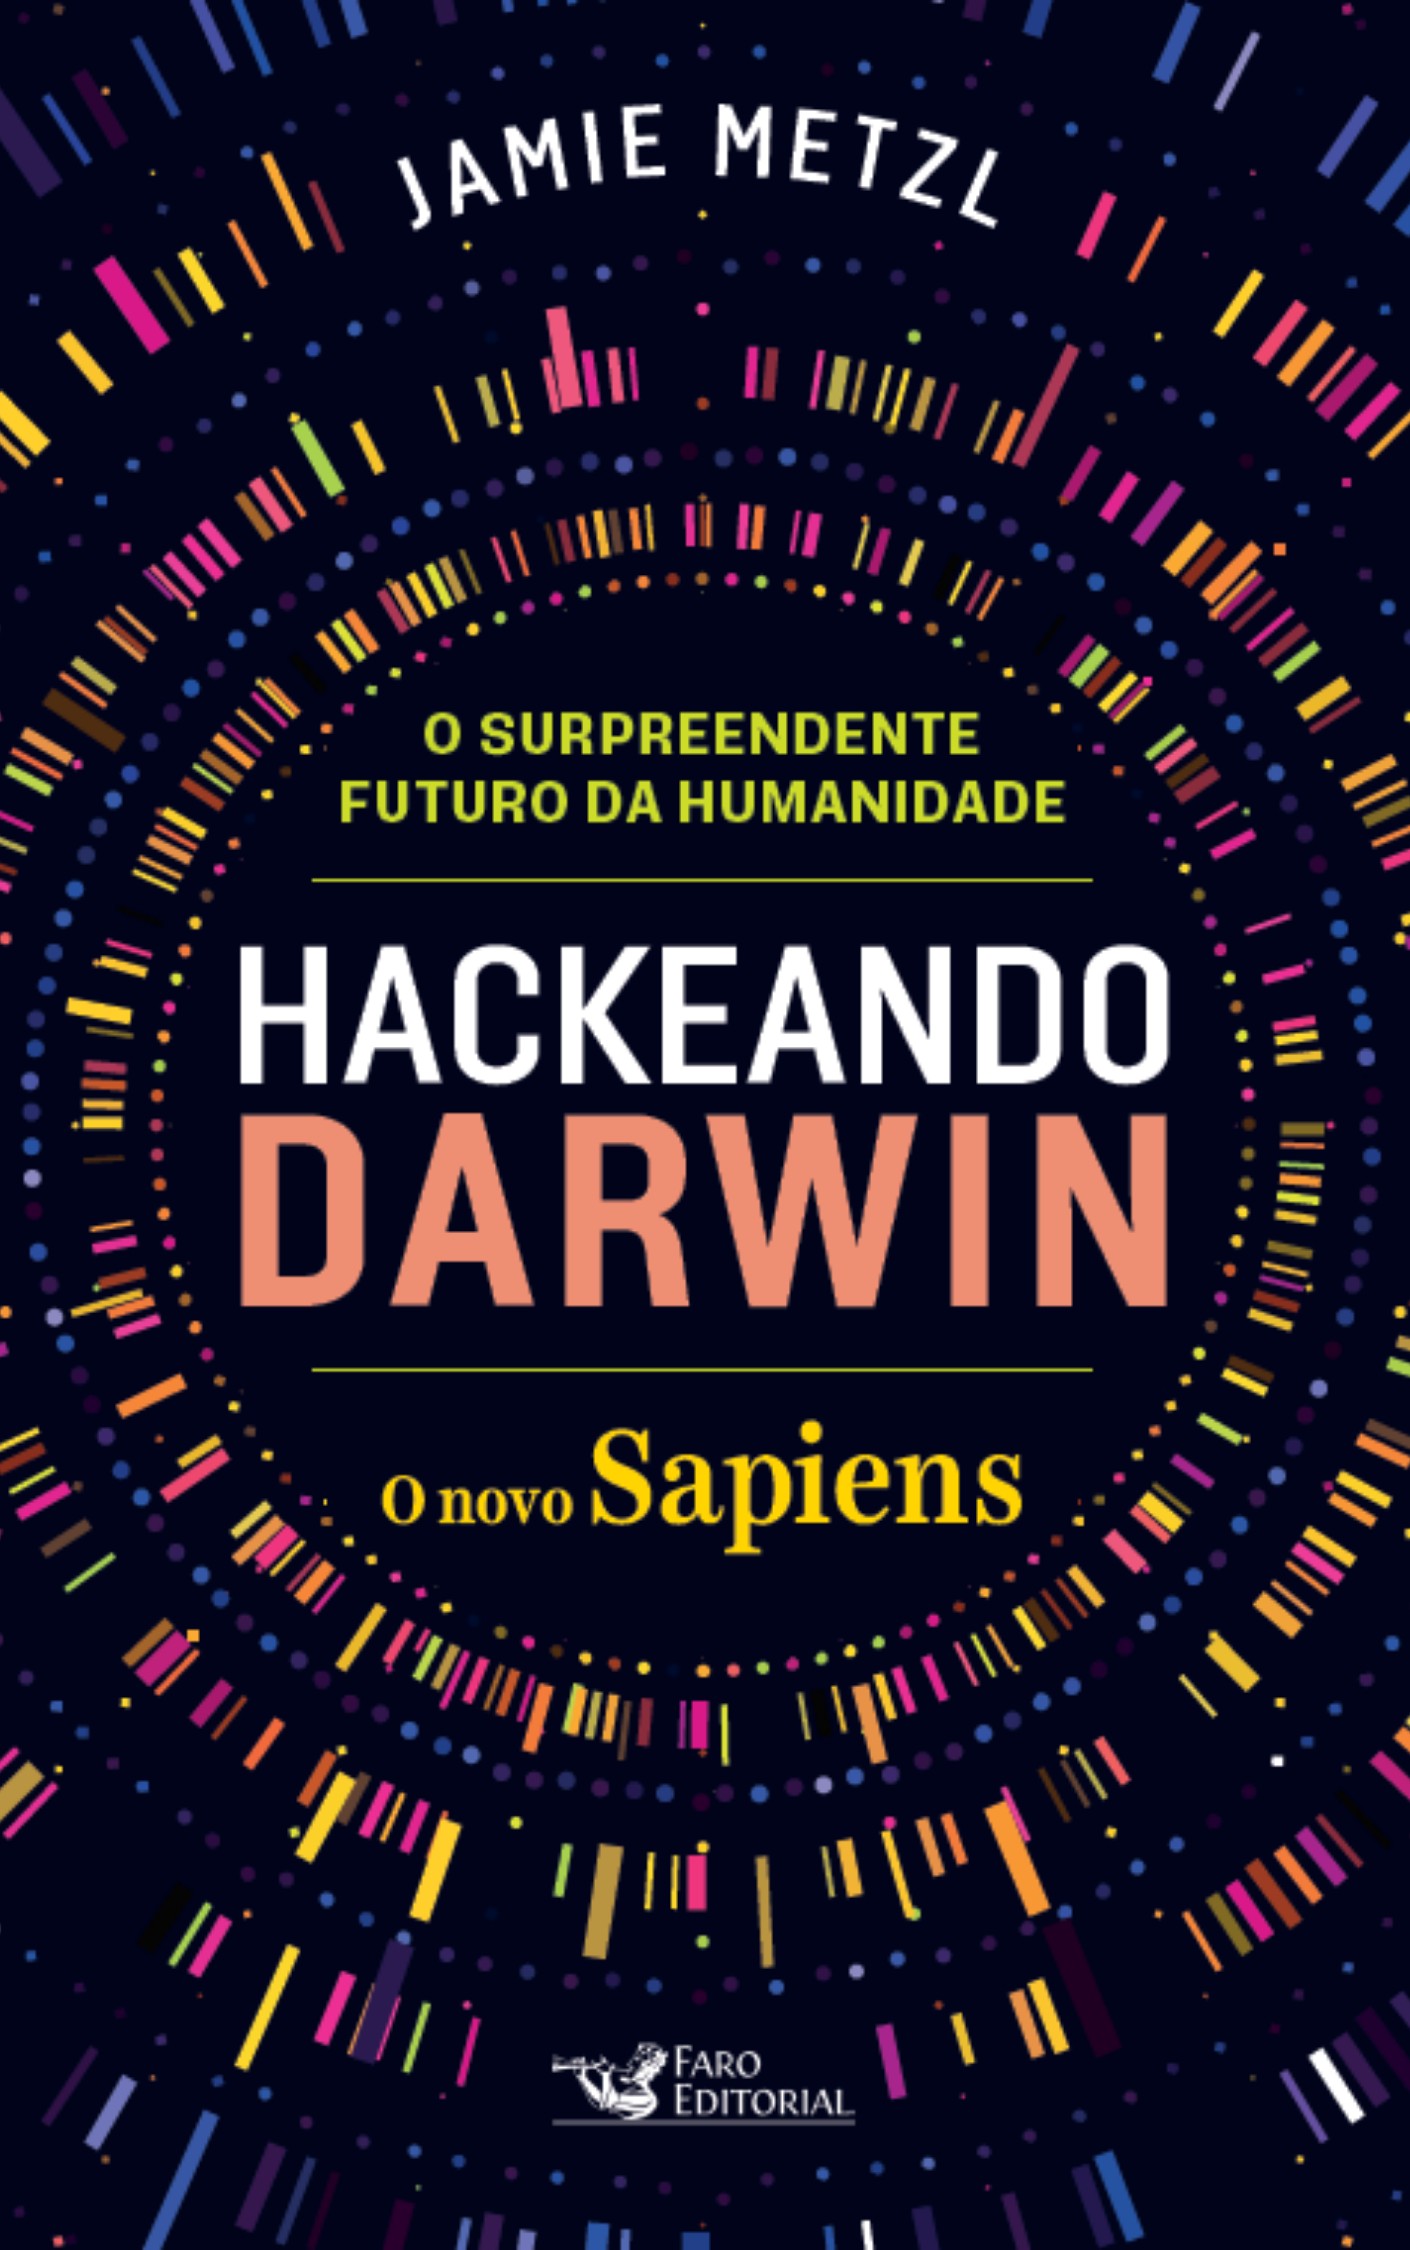 Hackeando Darwin (Faro Editorial, 304 páginas, R$ 54,90) (Foto: Divulgação)